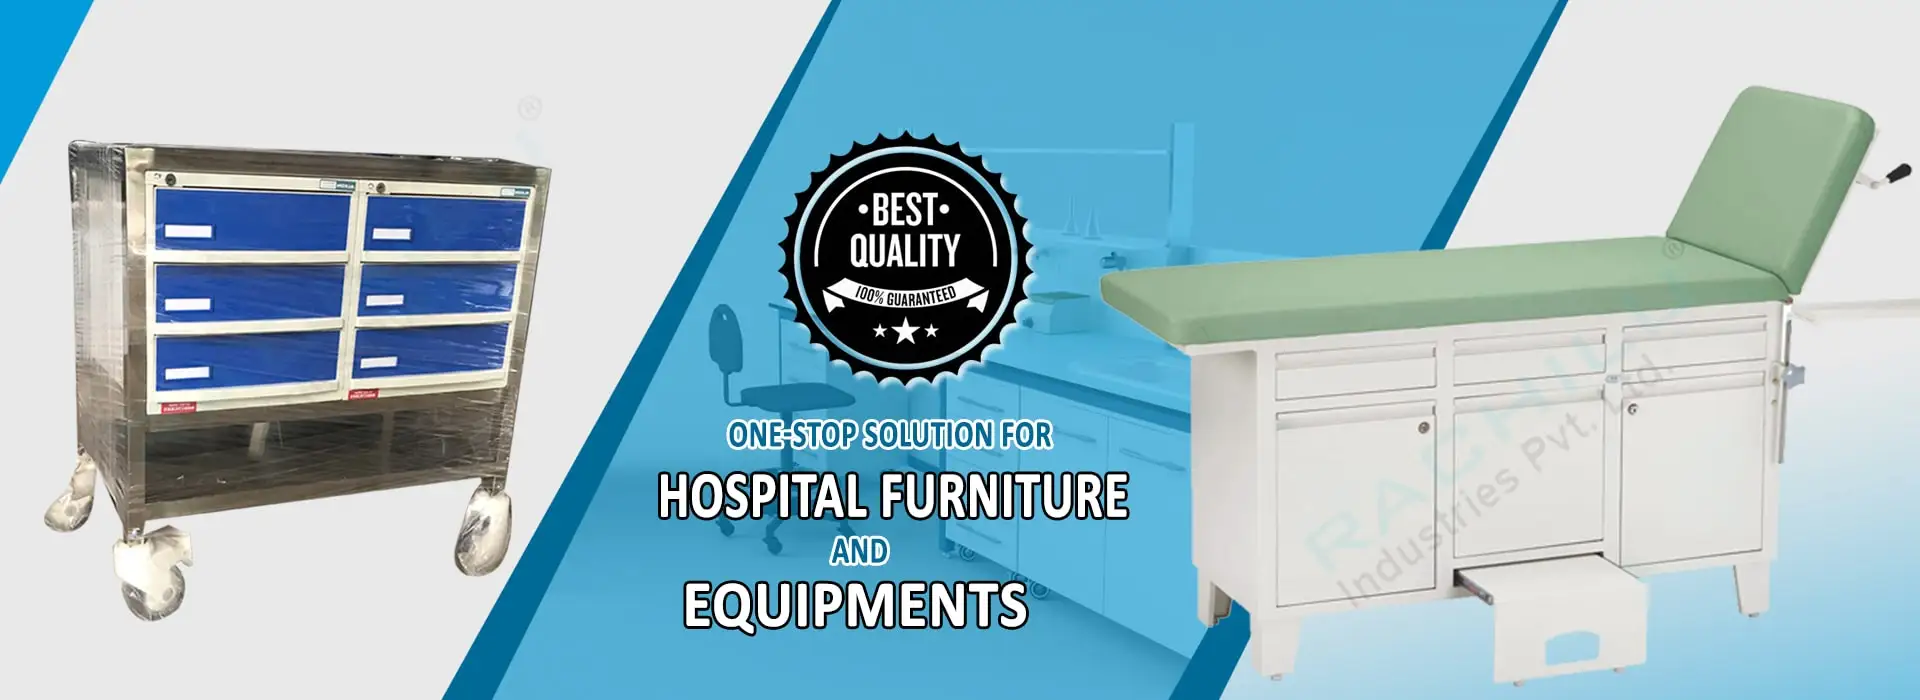 hospital furniture manufacturer in ahmedabad, mumbai, bangalore, delhi ncr, surat, vadodara, gujarat